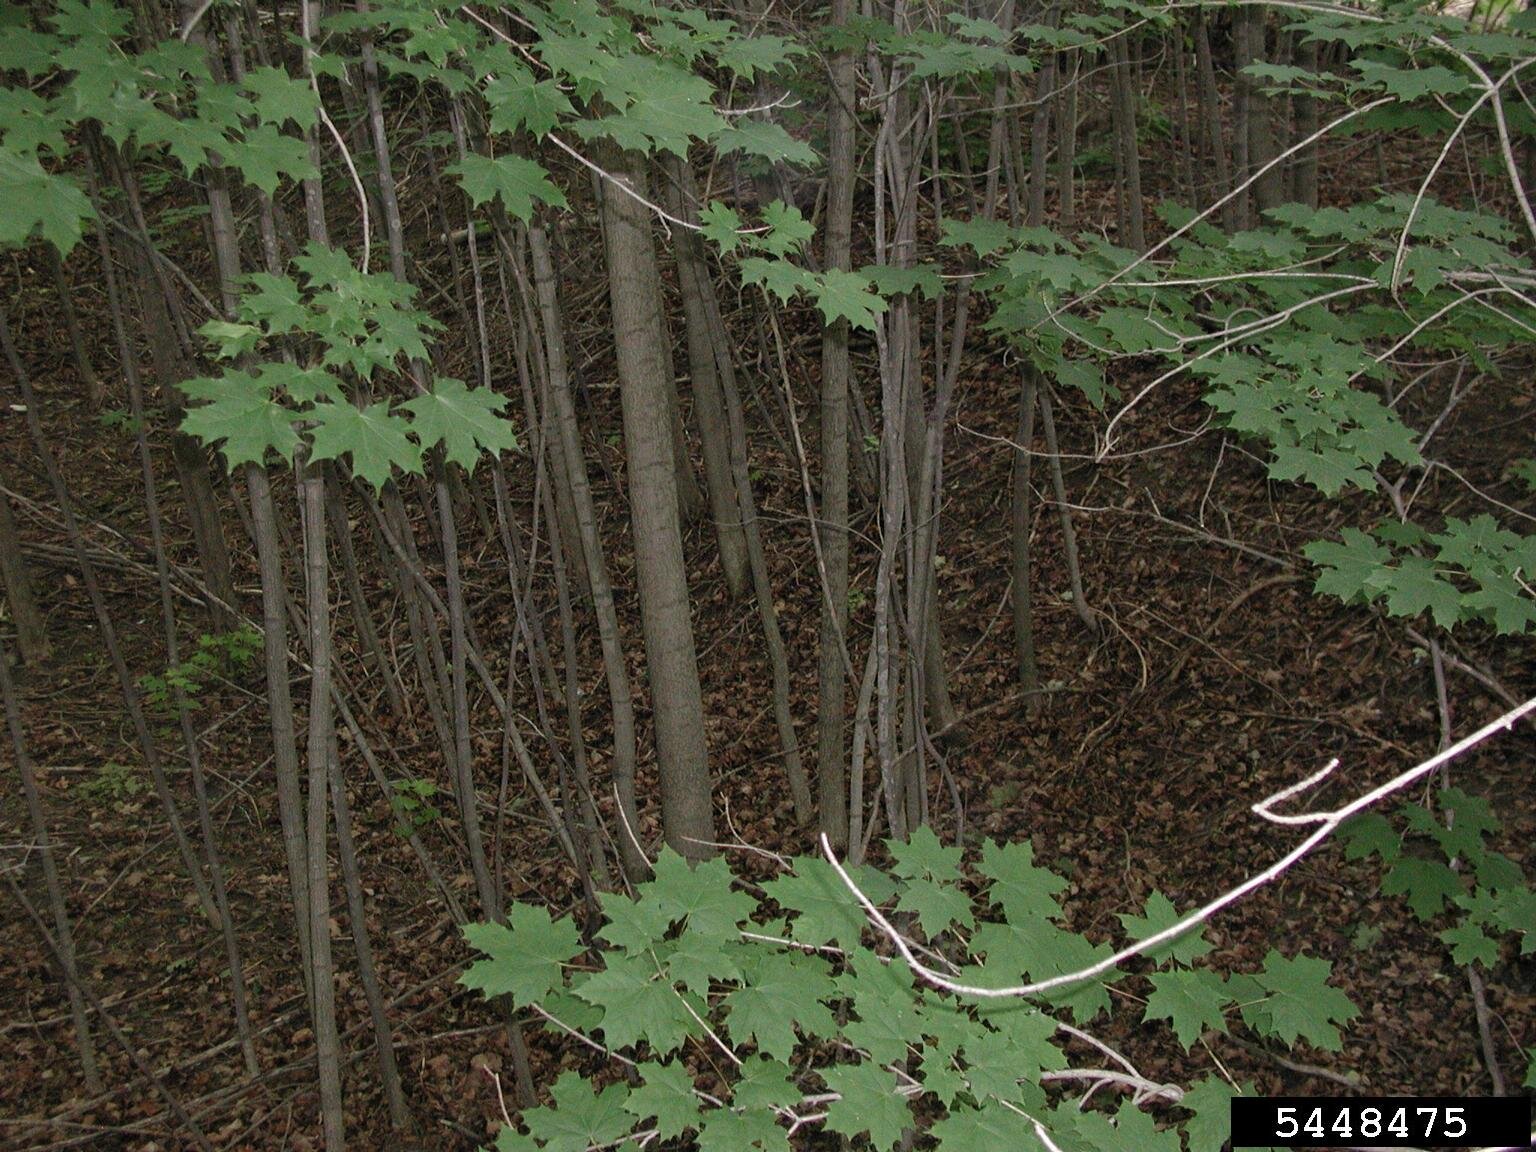 Norway maple spreading through woodland understory